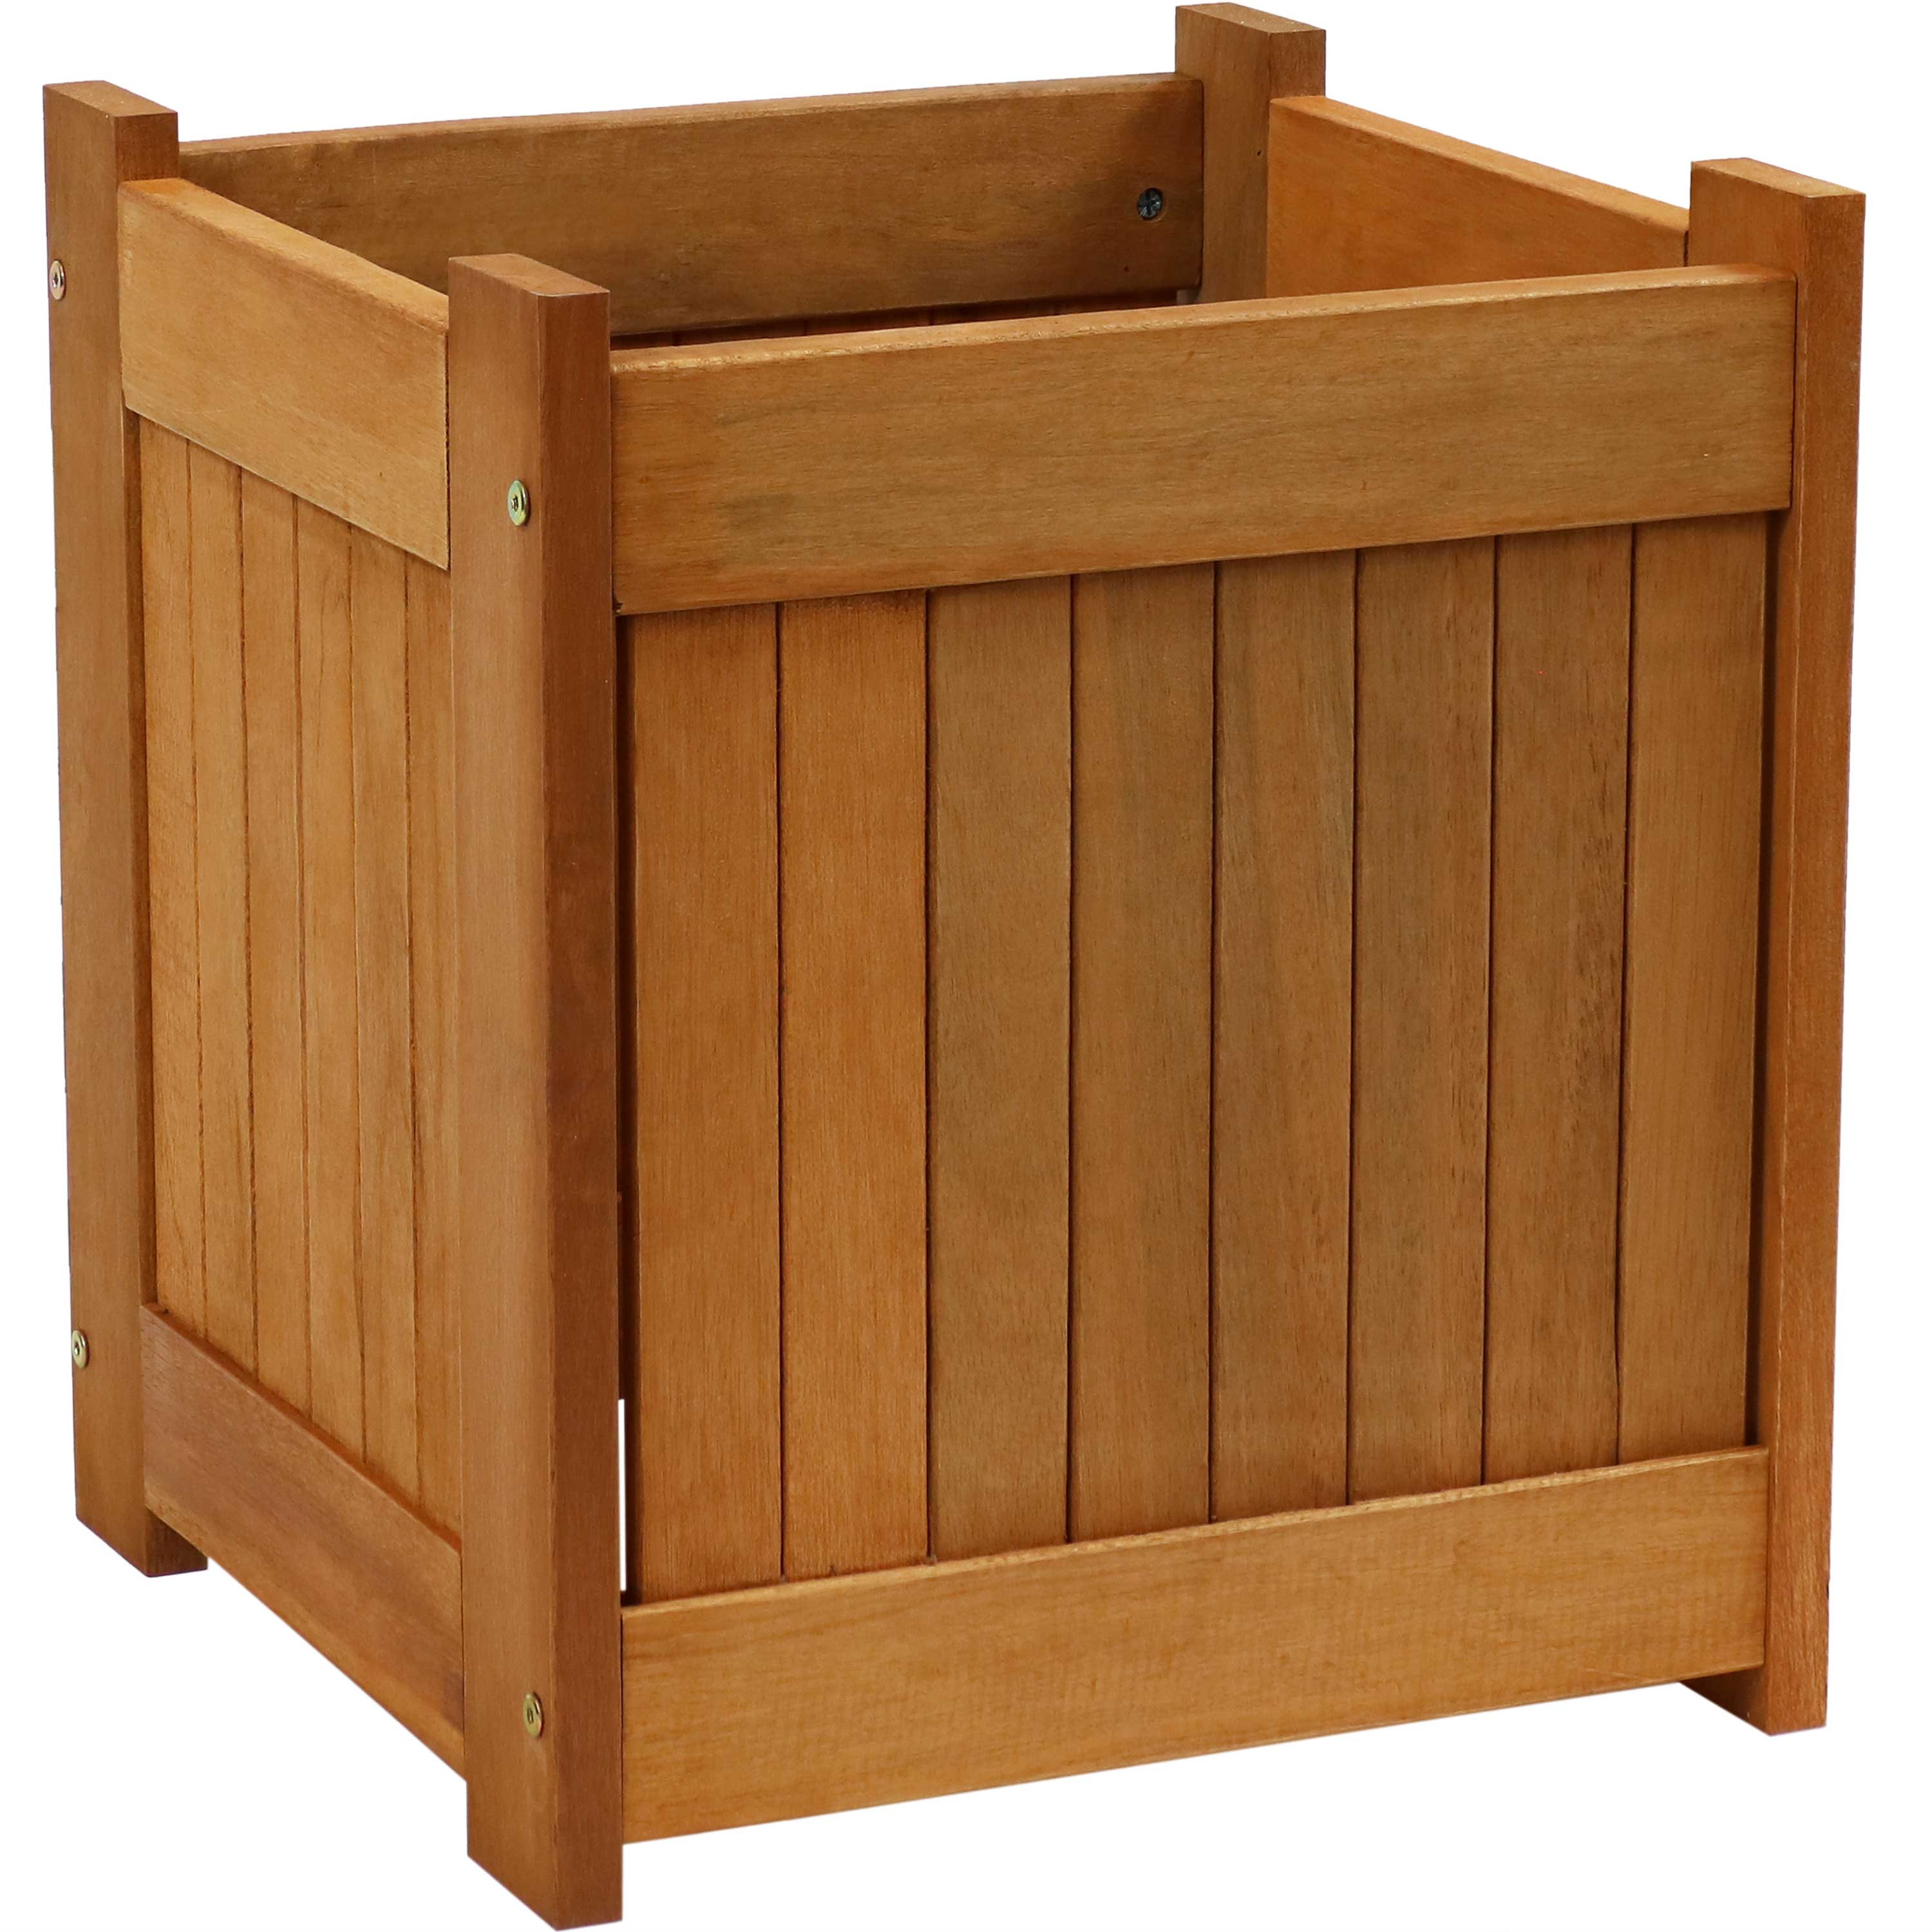 Sunnydaze Meranti Wood Outdoor Planter Box - 16-Inch - Single